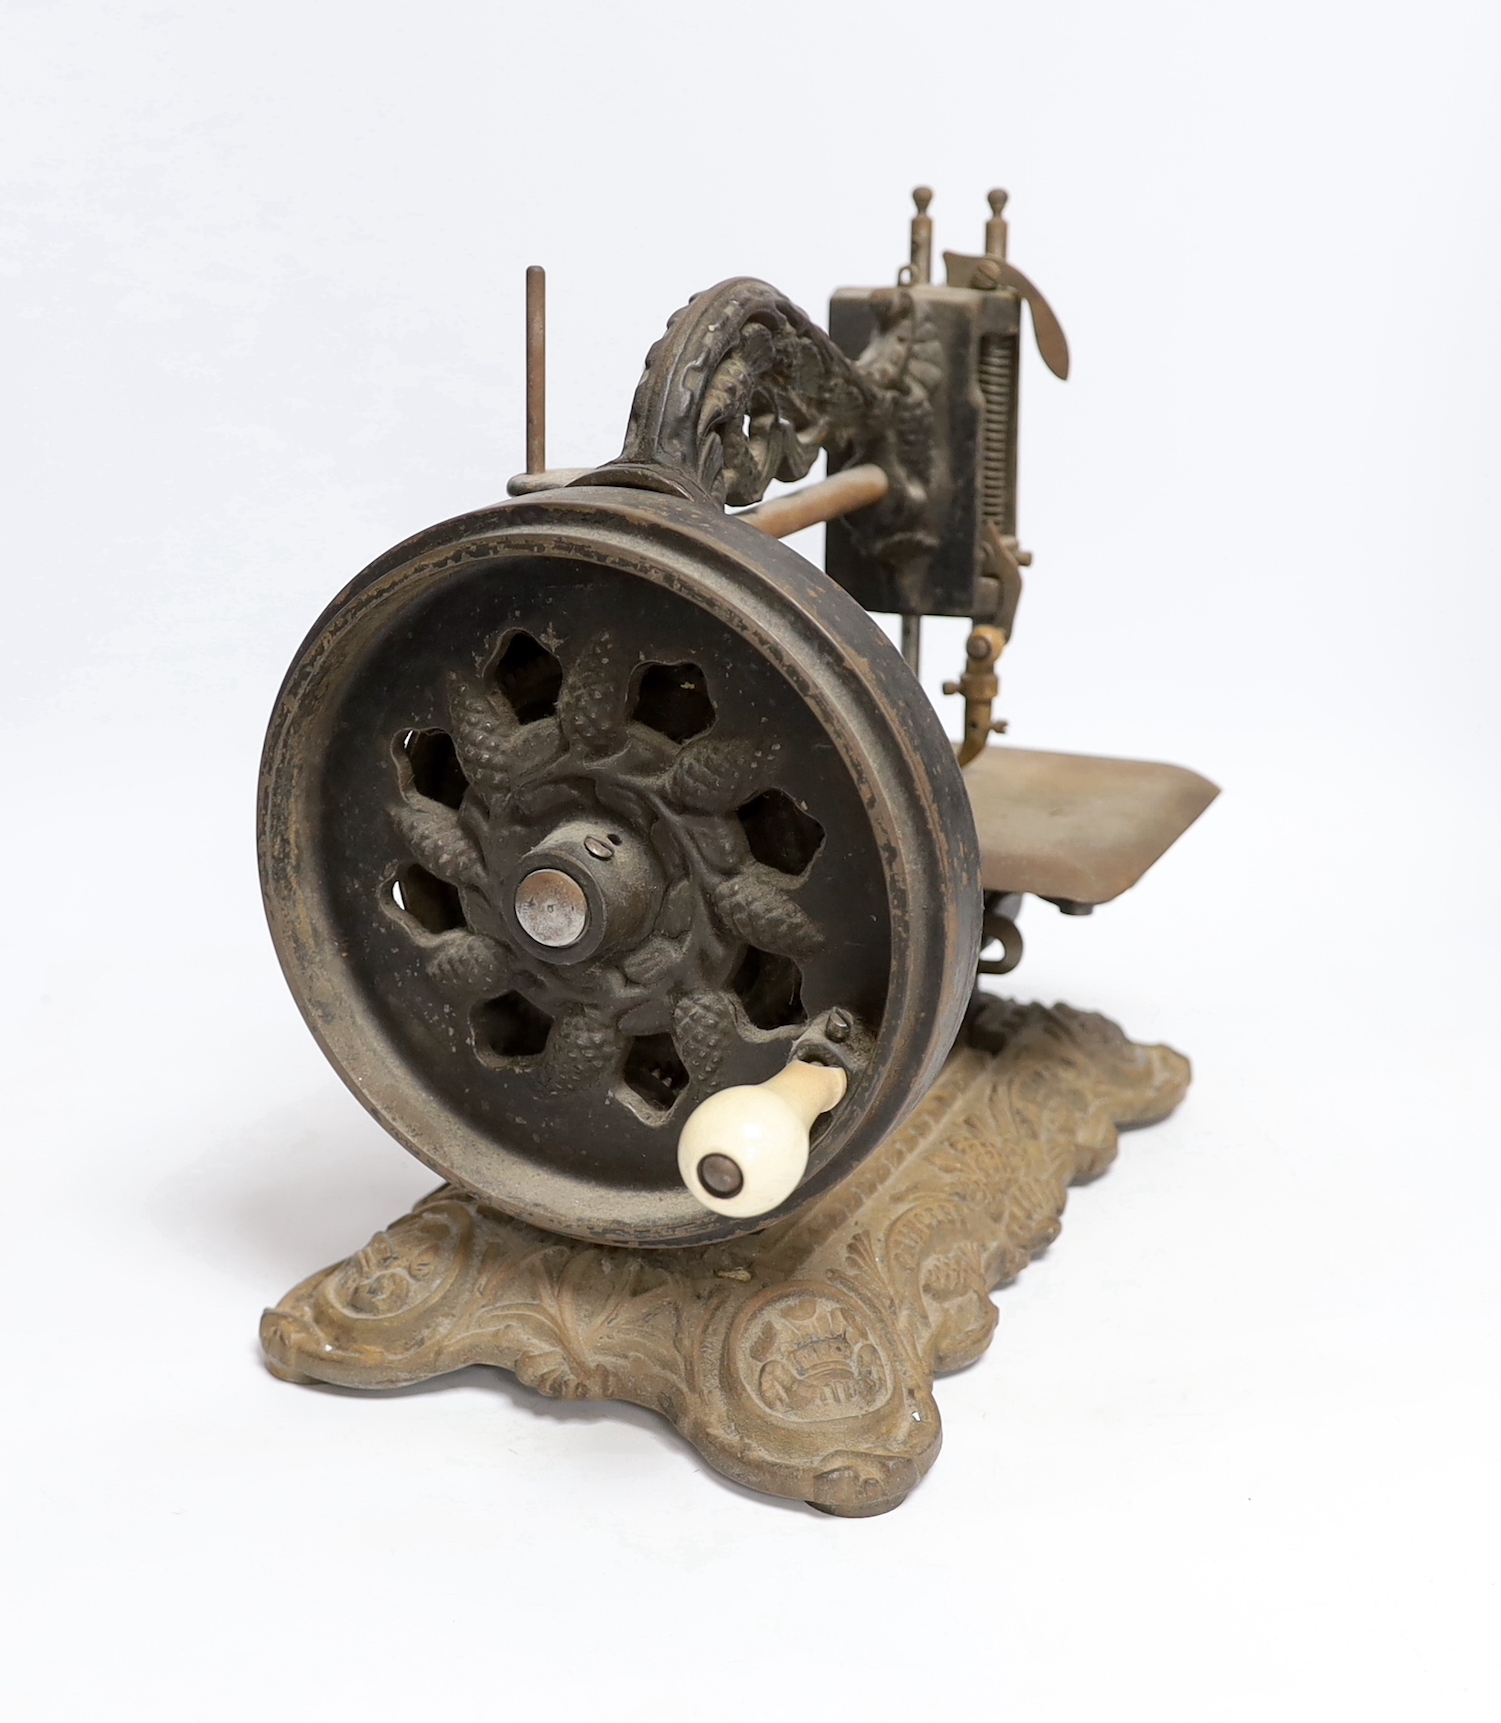 A Princess of Wales cast iron sewing machine